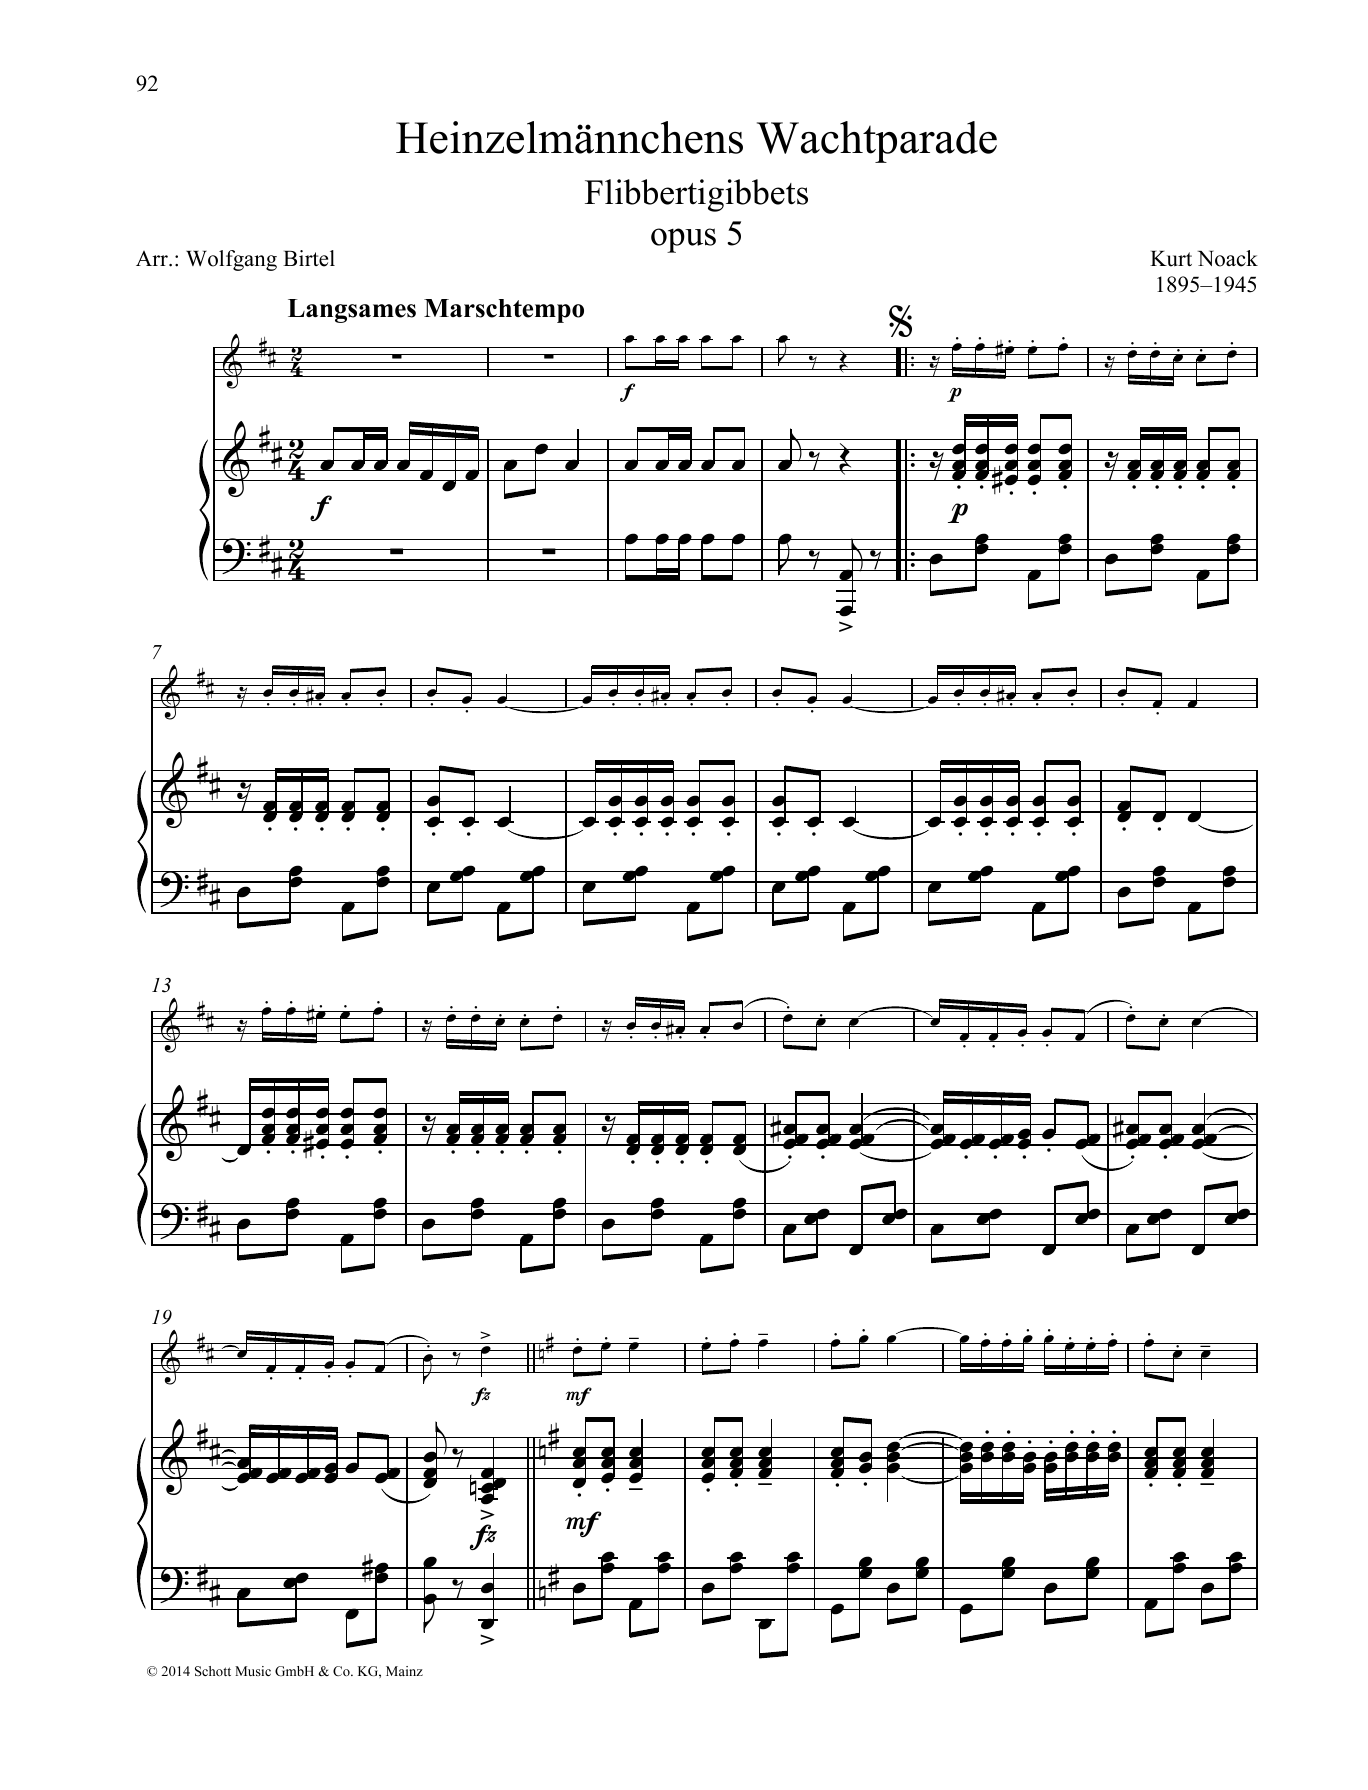 Kurt Noack Flibbertigibbets Sheet Music Notes & Chords for Woodwind Solo - Download or Print PDF